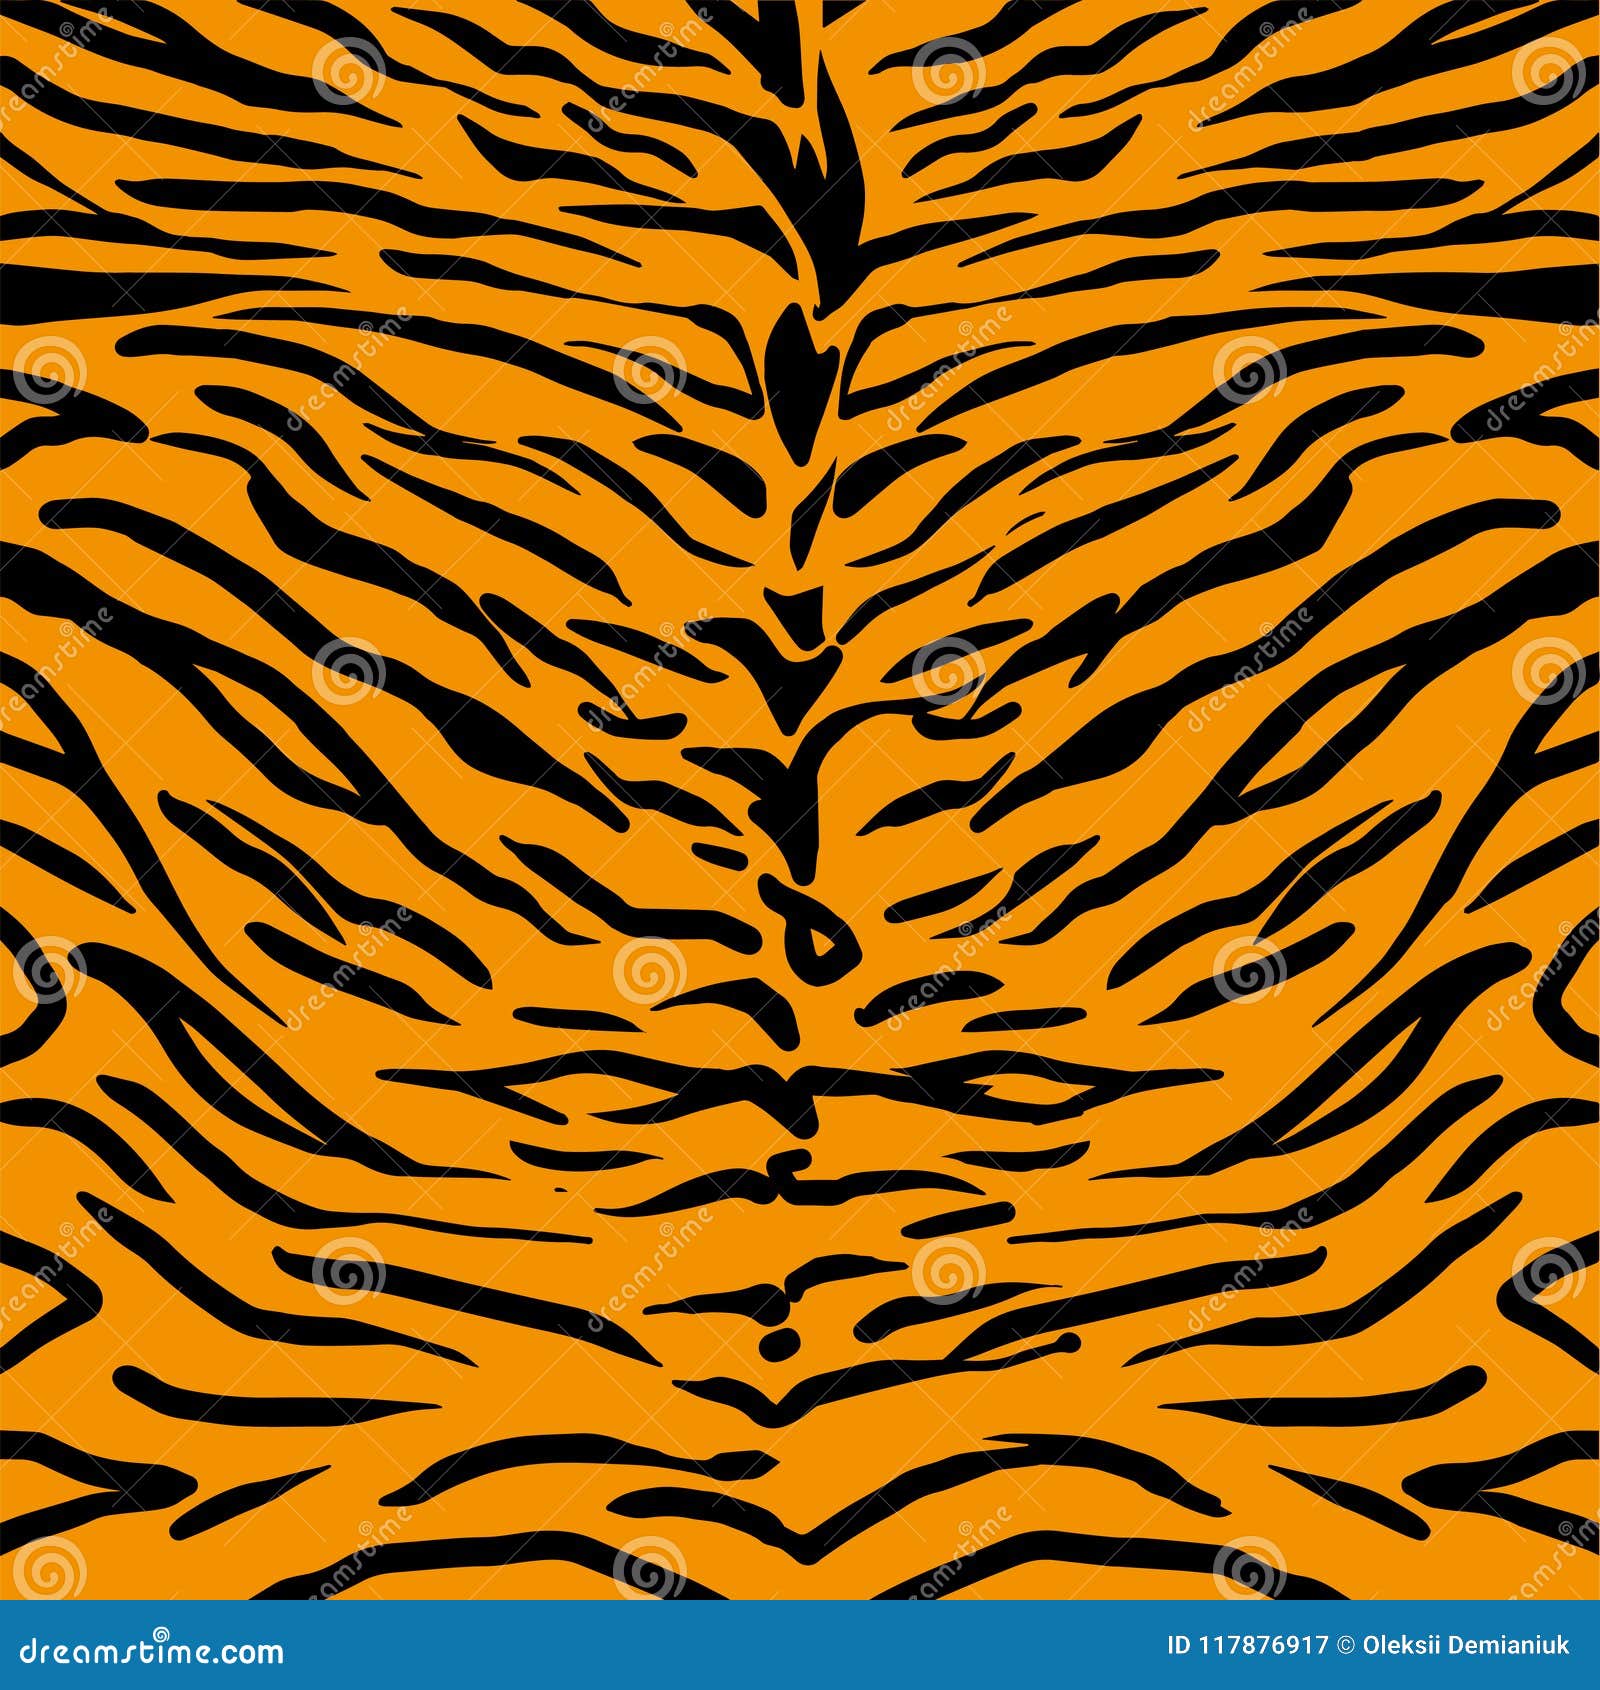 Tiger skin pattern stock vector. Illustration of graphic - 117876917